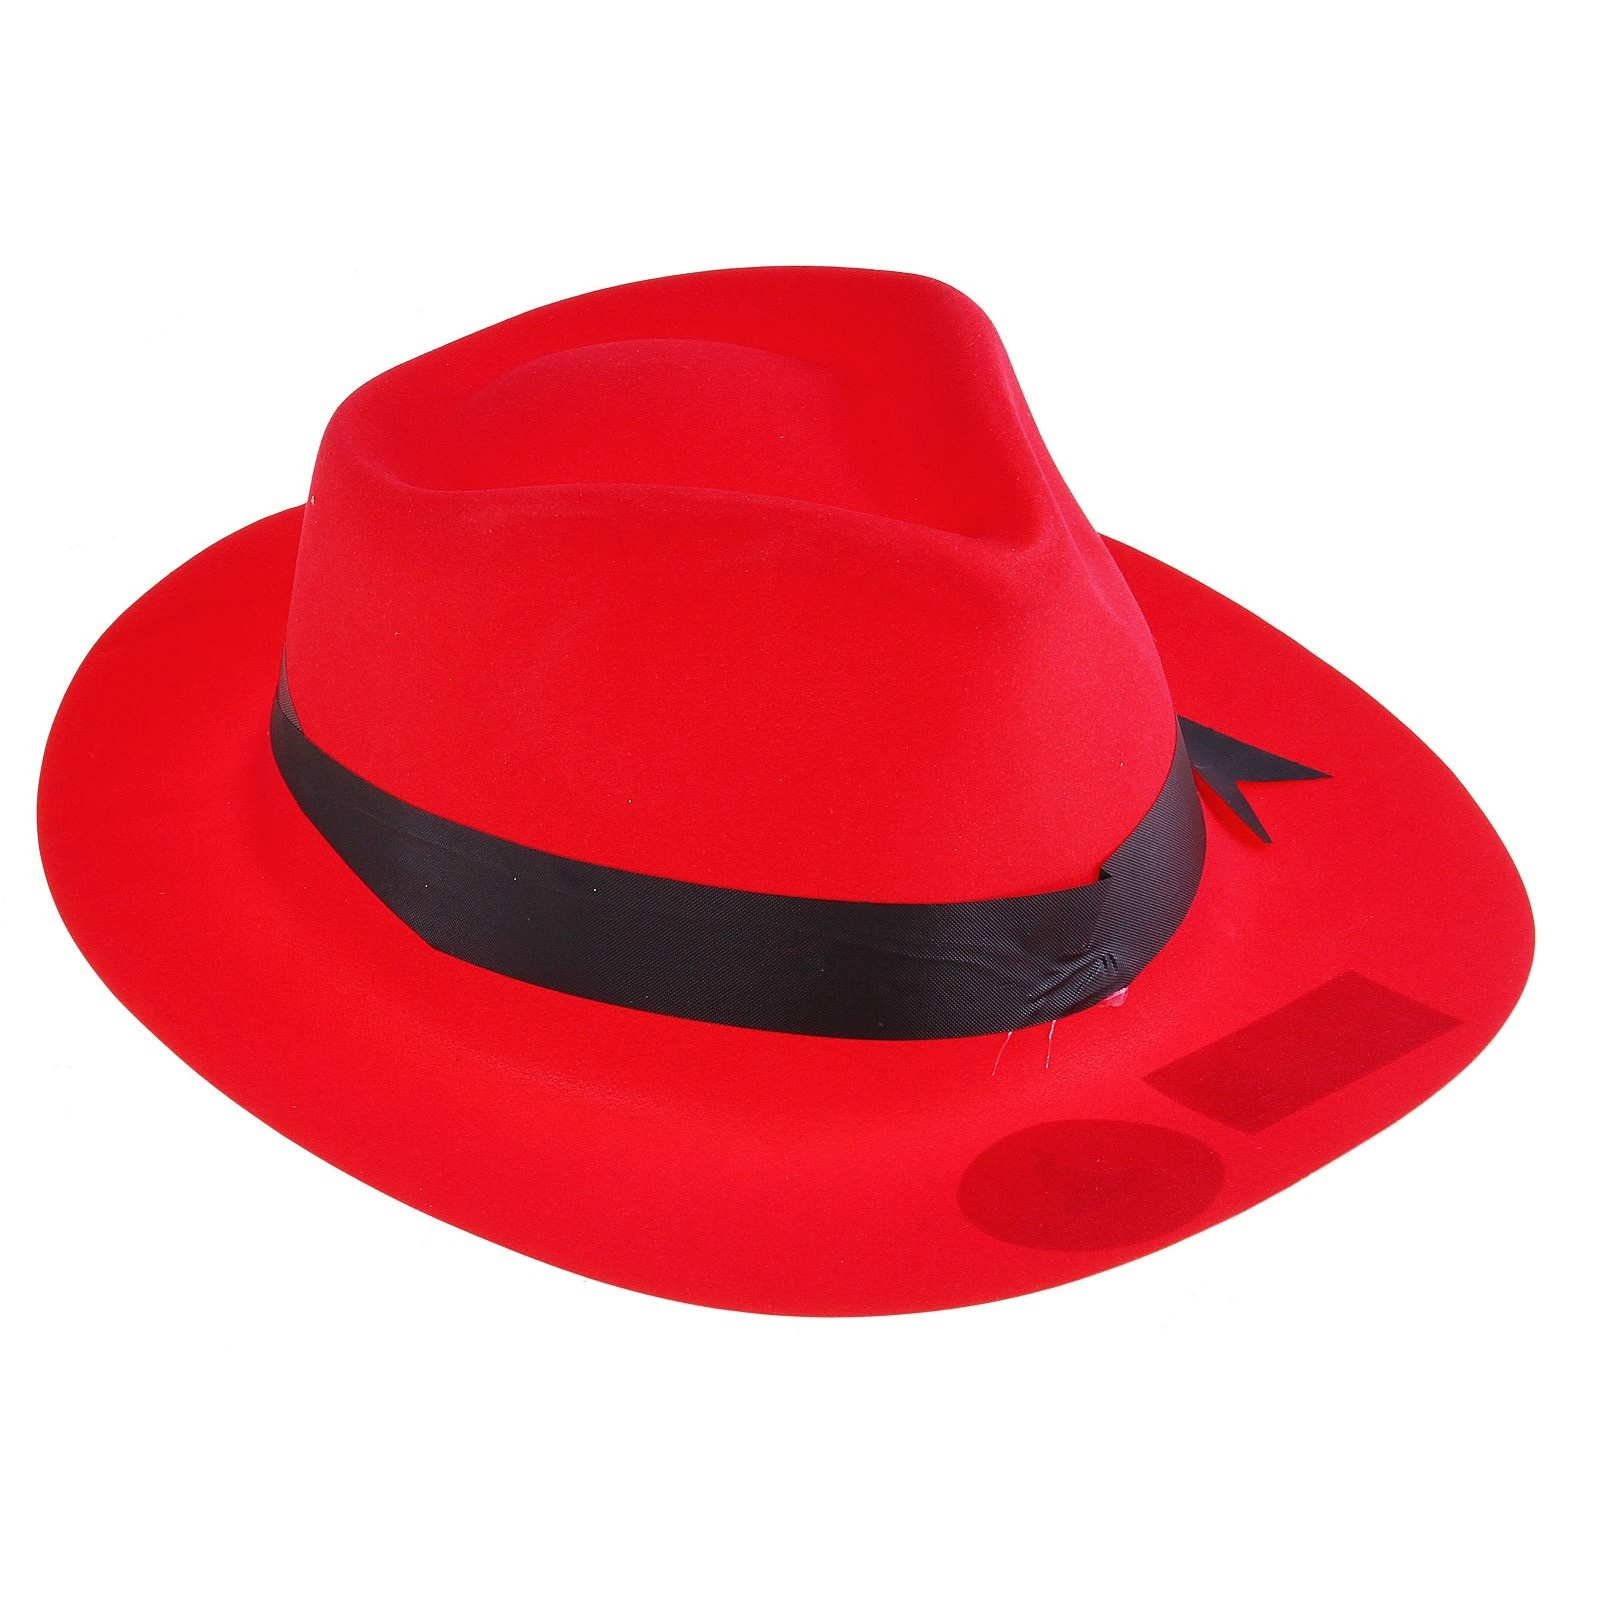 Шляпа 325745 с кантом р.56 цвет: красная - Орск 